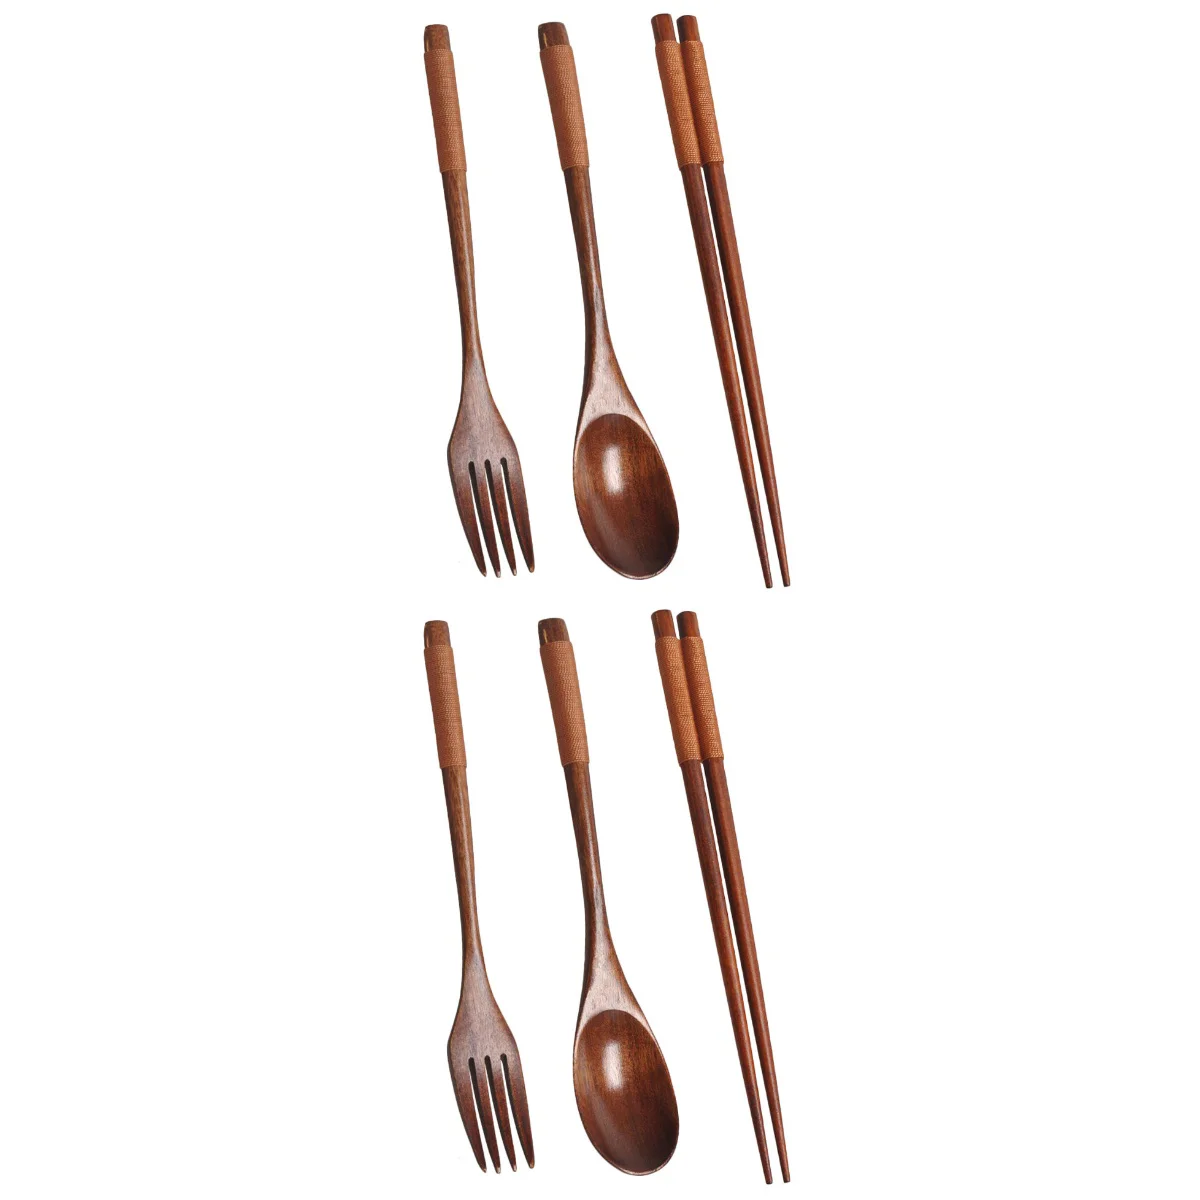 

Set Wood Wooden Cutlery Chopsticks Forks Spoons Tableware Camping Utensils Flatware Cooking Picnicportable Dinner Travel Utensil